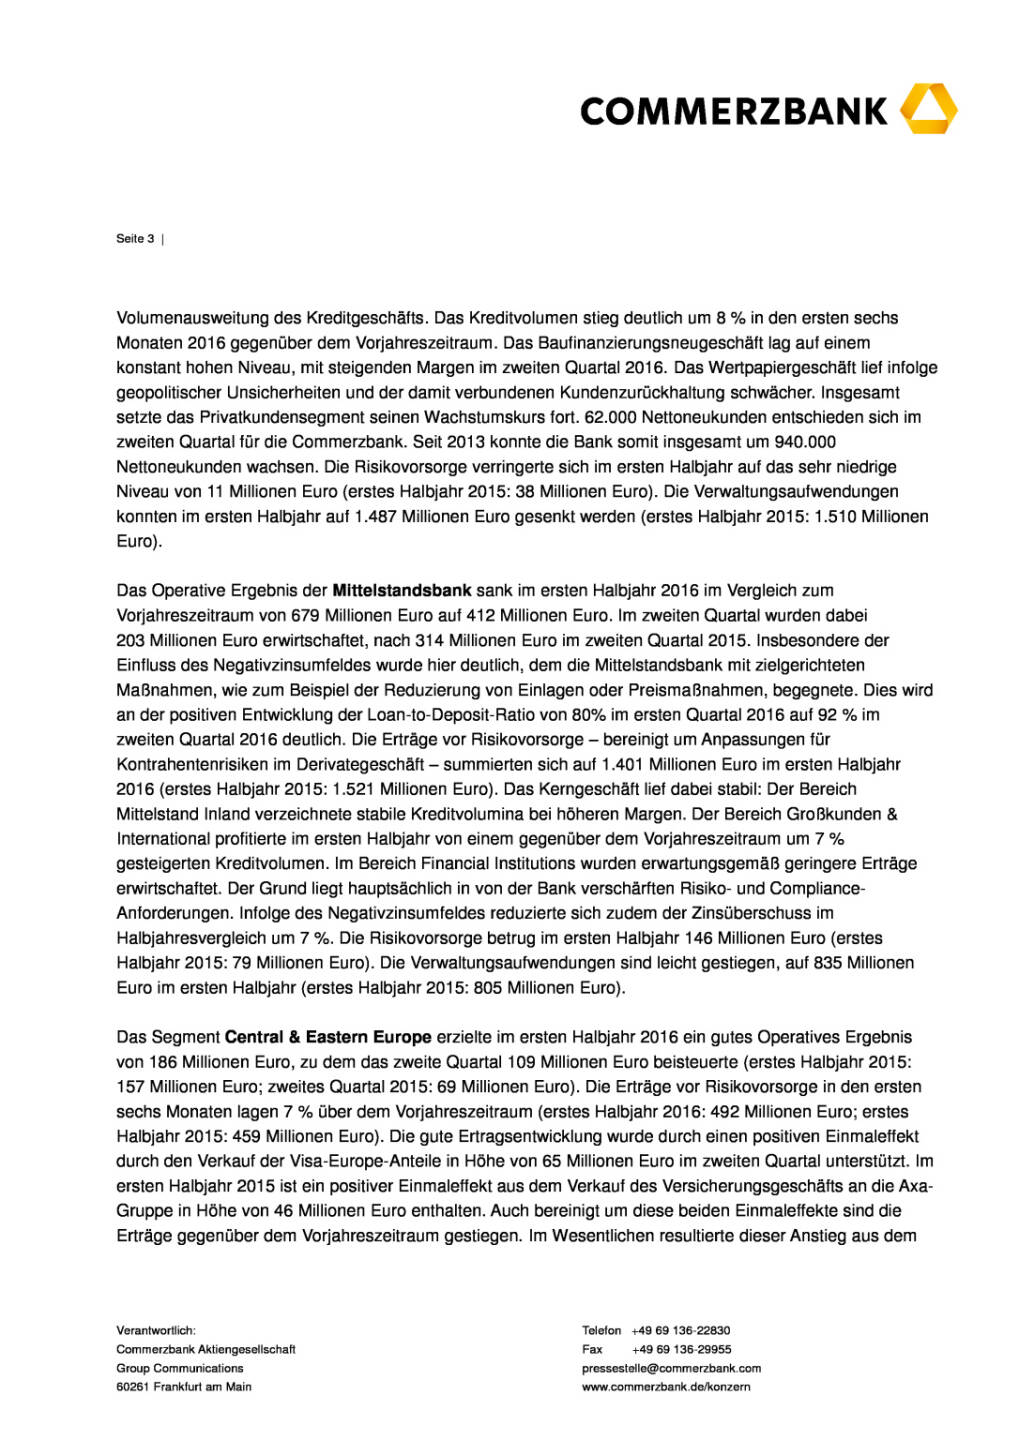 Commerzbank: gute Marktposition in schwierigem Umfeld, Seite 3/8, komplettes Dokument unter http://boerse-social.com/static/uploads/file_1539_commerzbank_gute_marktposition_in_schwierigem_umfeld.pdf